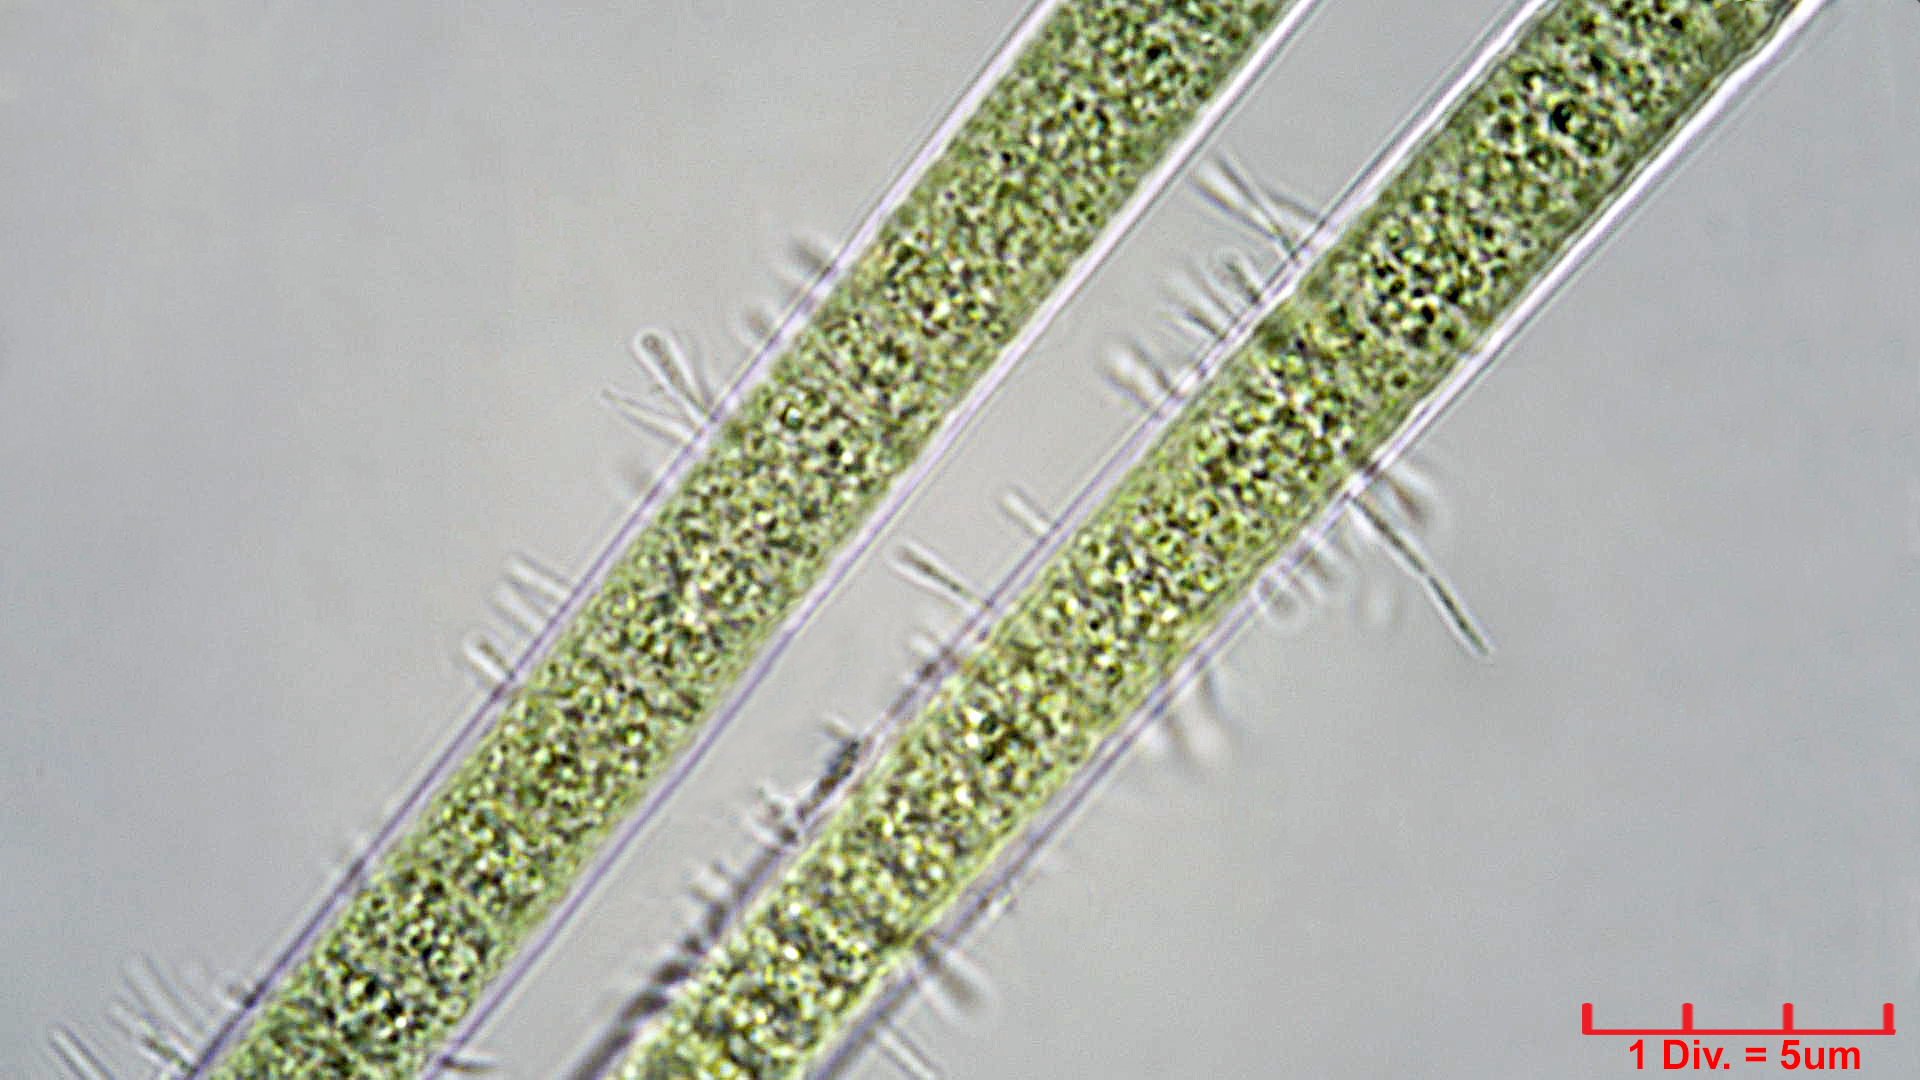 ./Cyanobacteria/Oscillatoriales/Oscillatoriaceae/Lyngbya/semiplena/lyngbya-semiplena-4.jpg